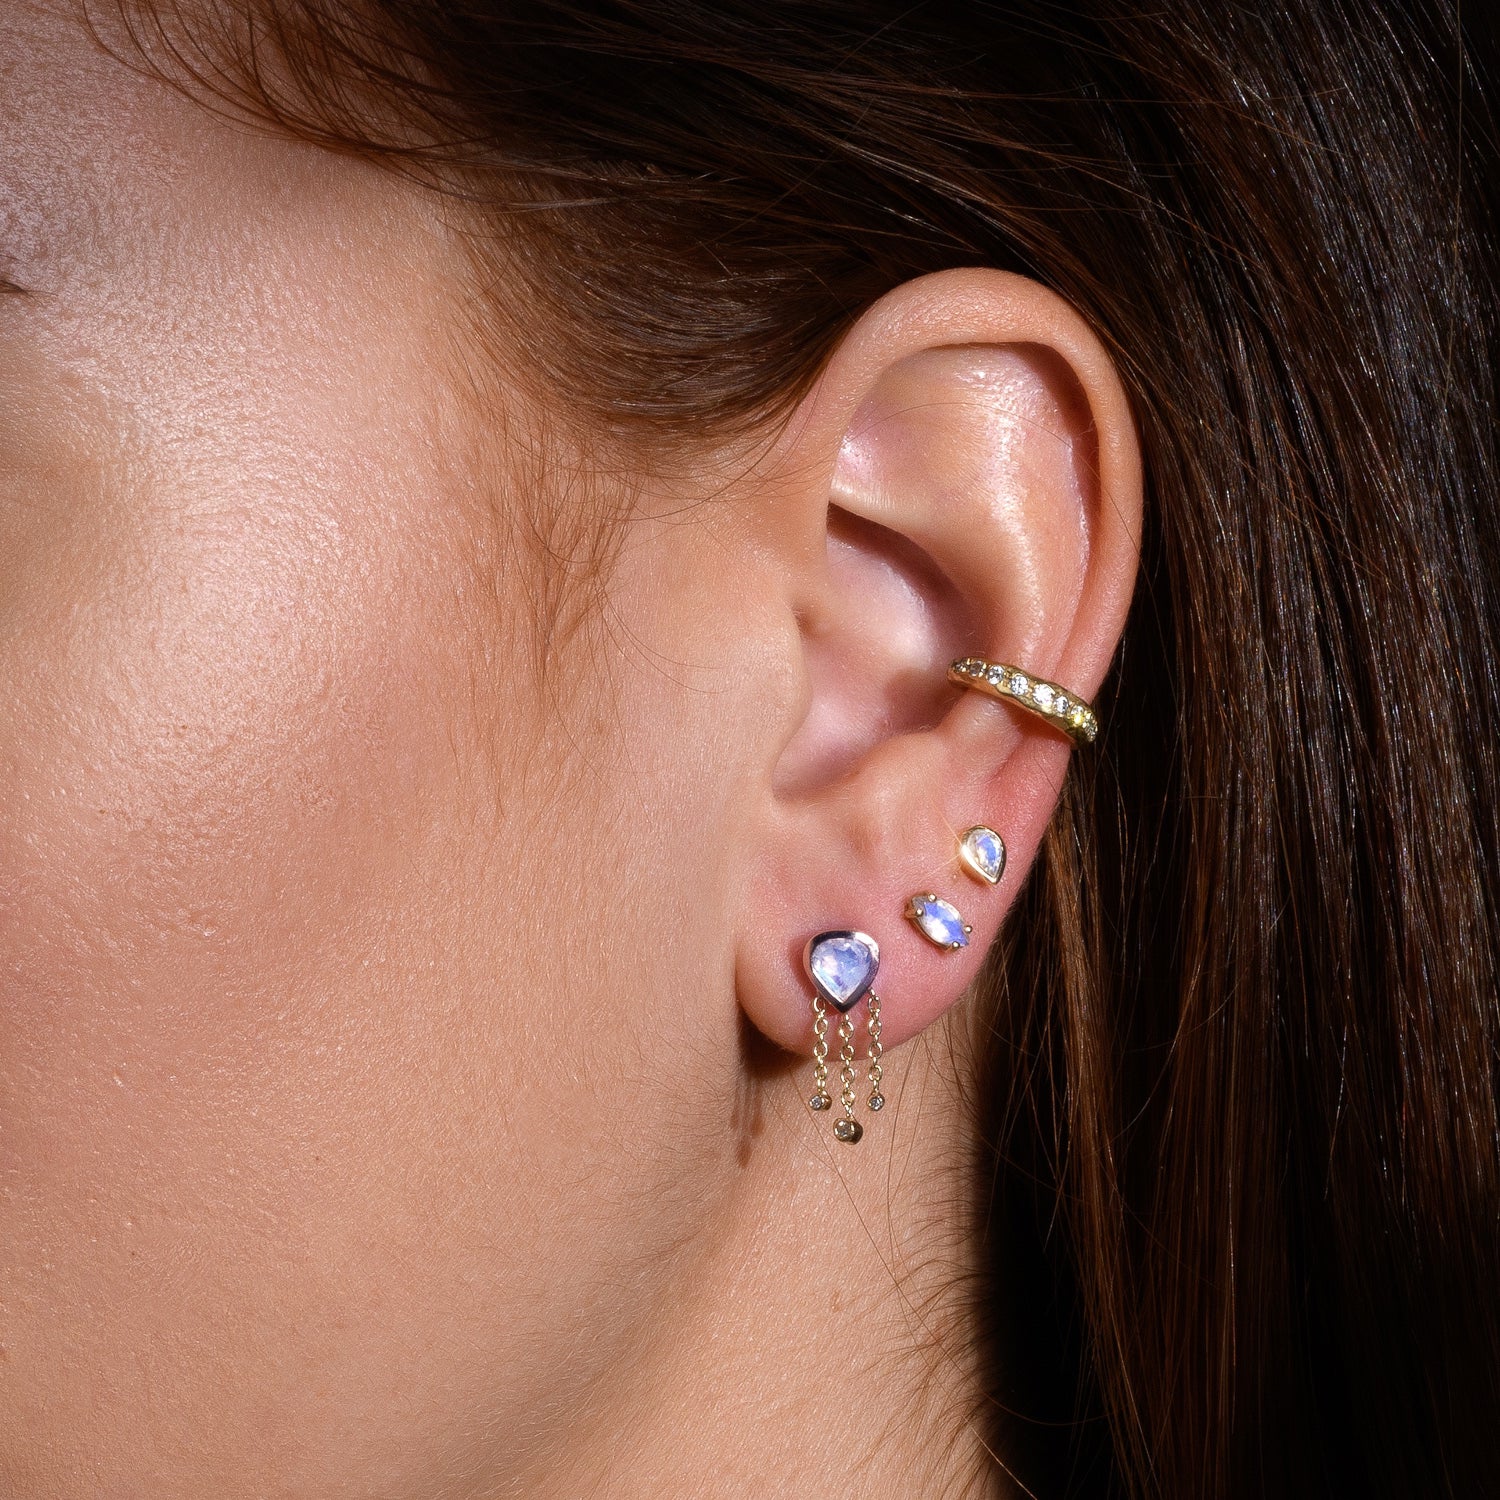 Bhagsu Earring &amp; Moonstone  - one of a kind - Danielle Gerber Freedom Jewelry